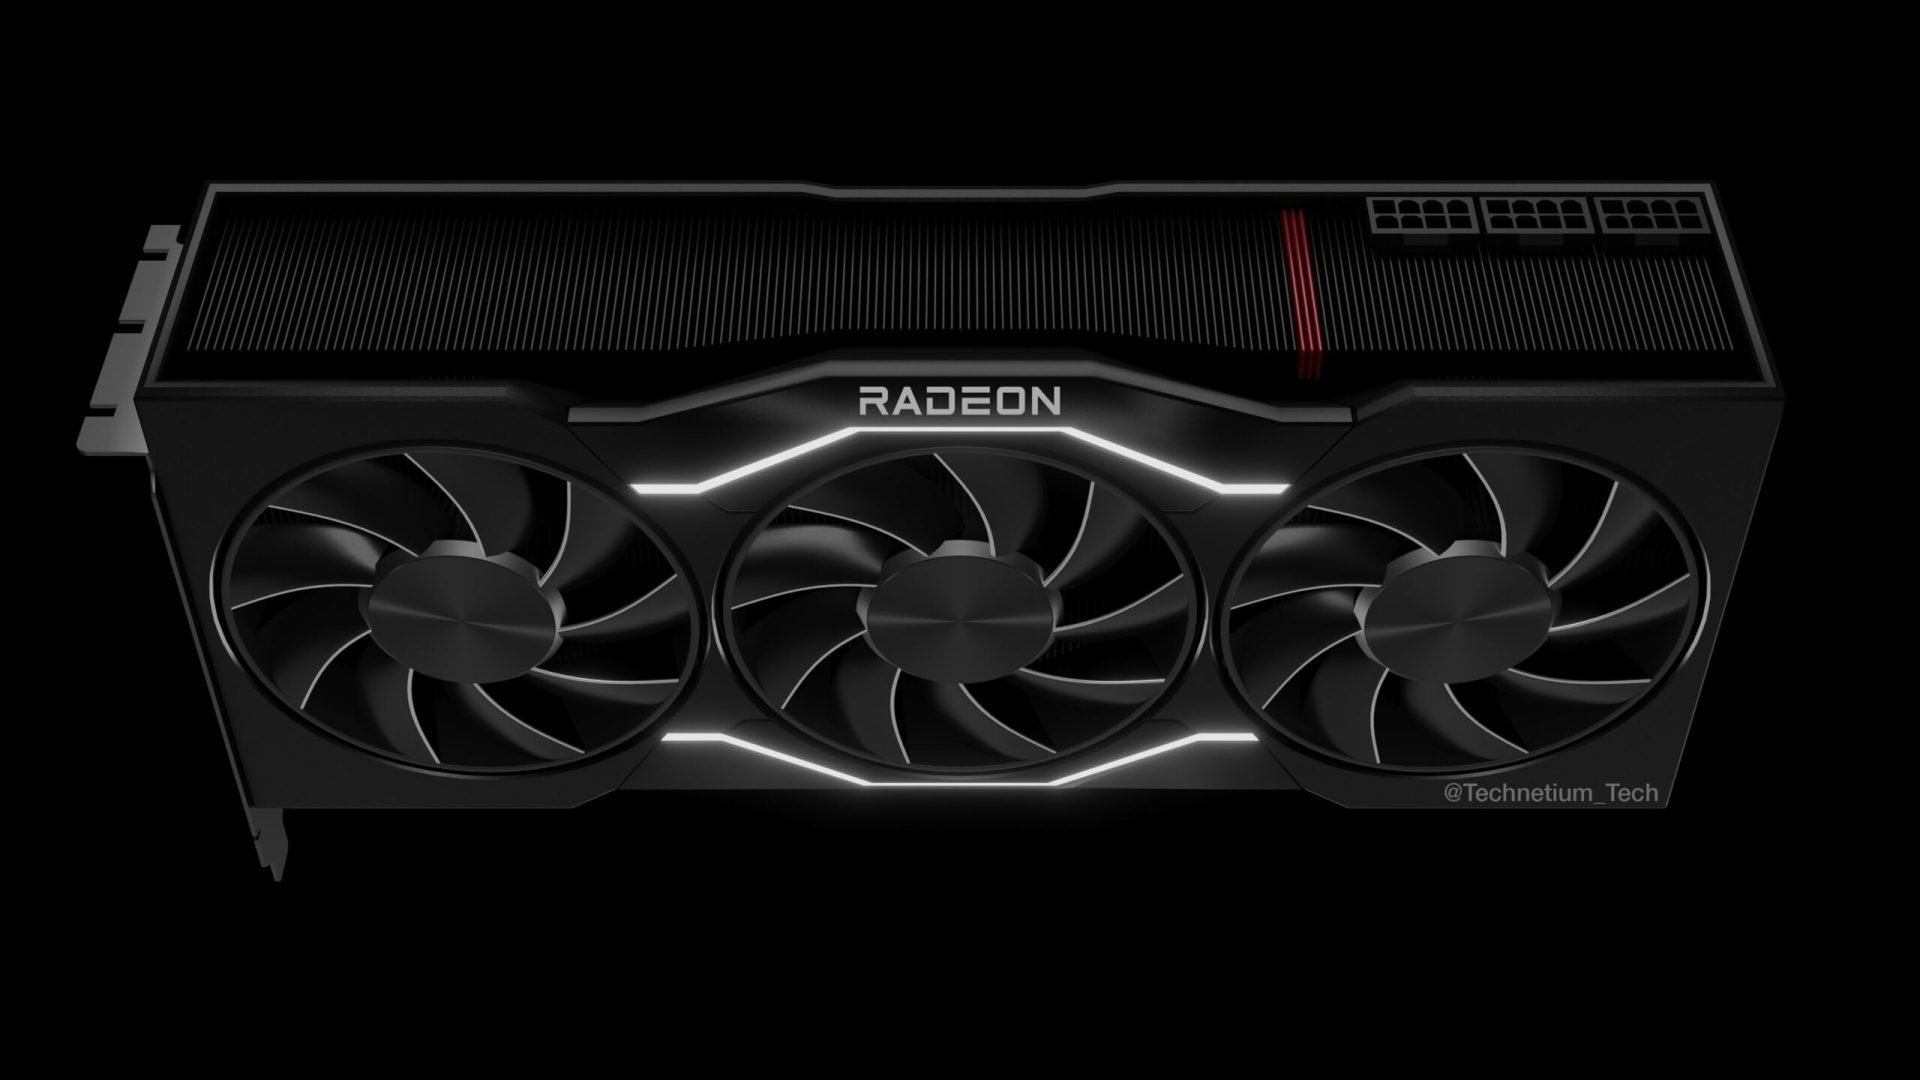 Radeon-RX-7000-Serisine-Ait-Render-Gorselleri-Paylasildi-1920x1080.jpg